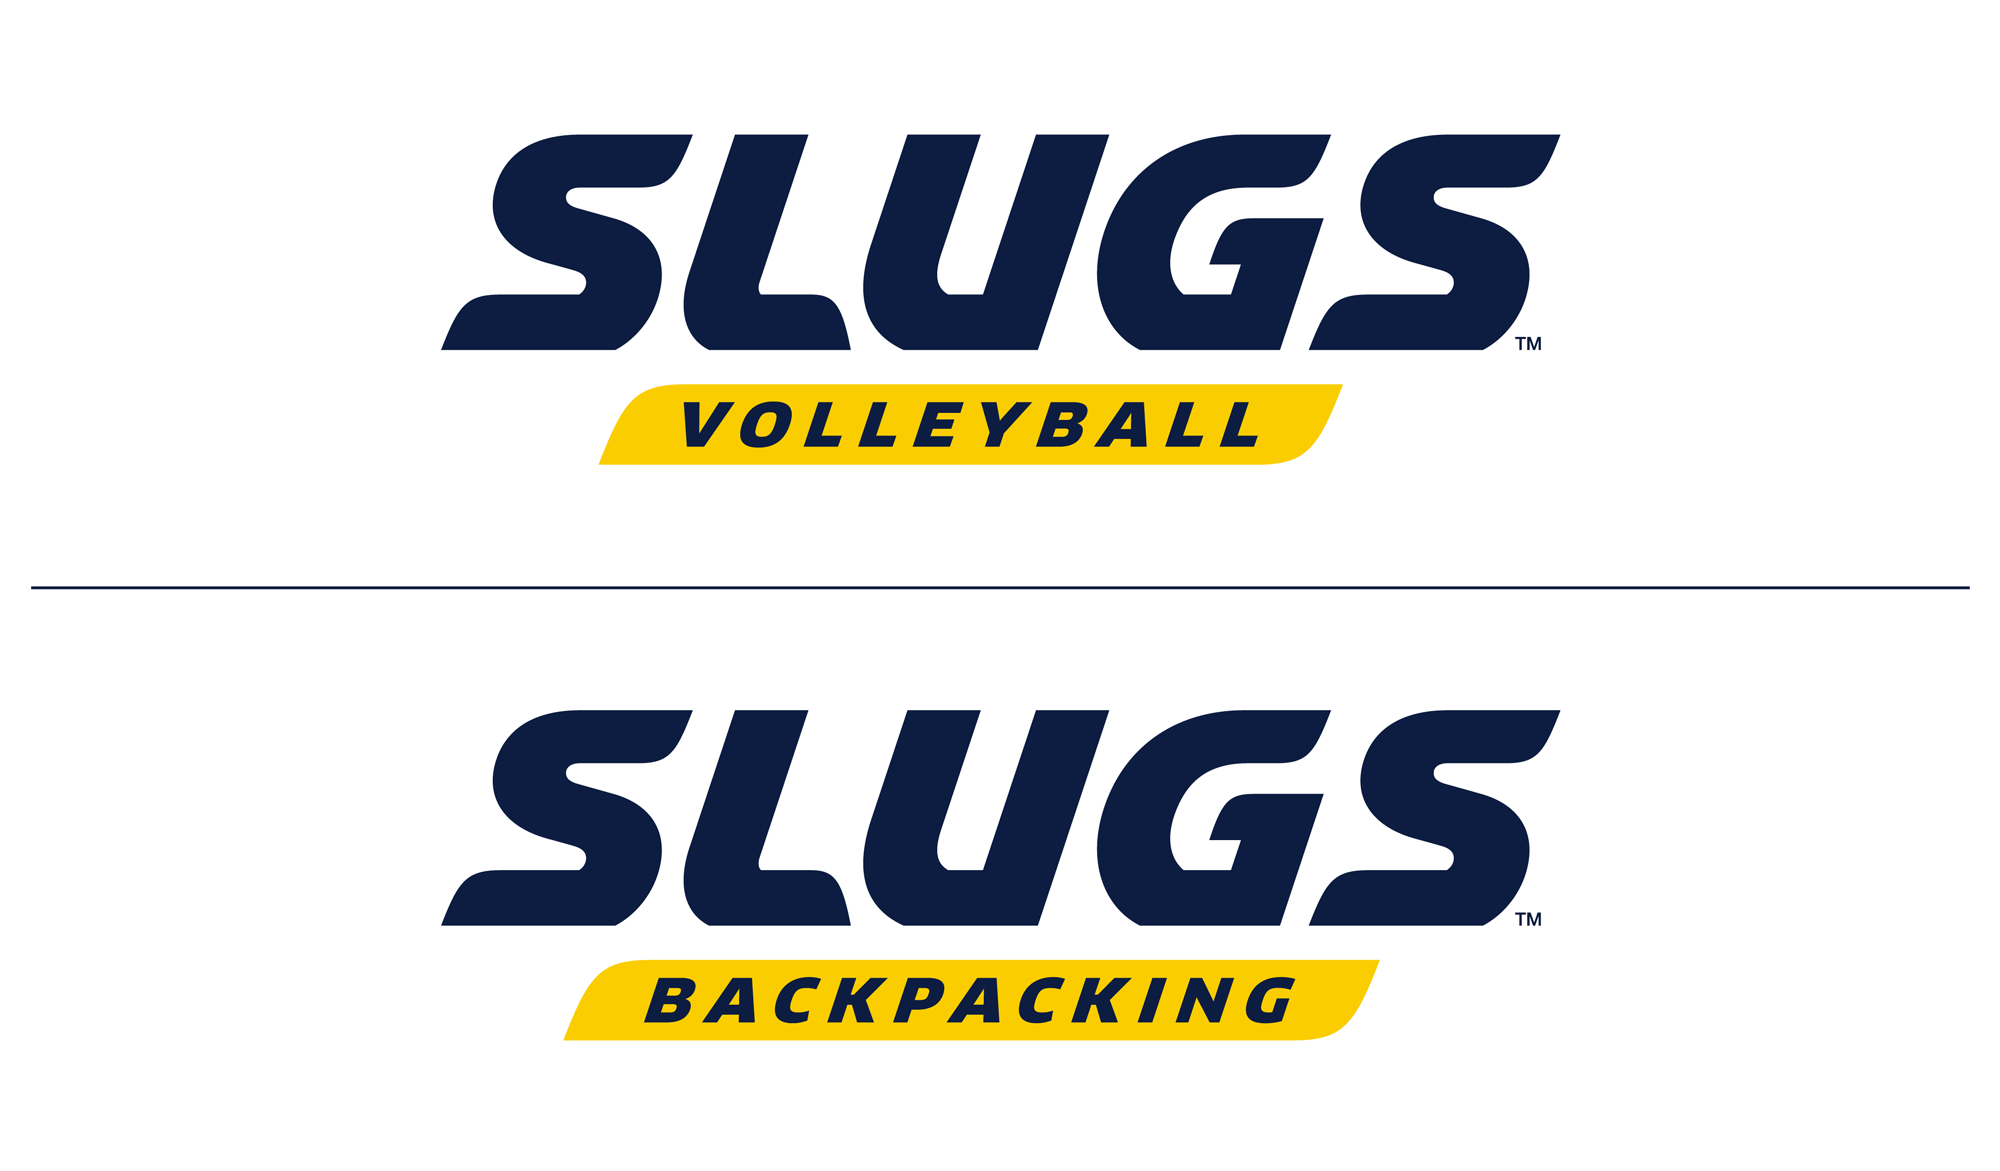 New Logos for UC Santa Cruz Banana Slugs by Skye Design Studios